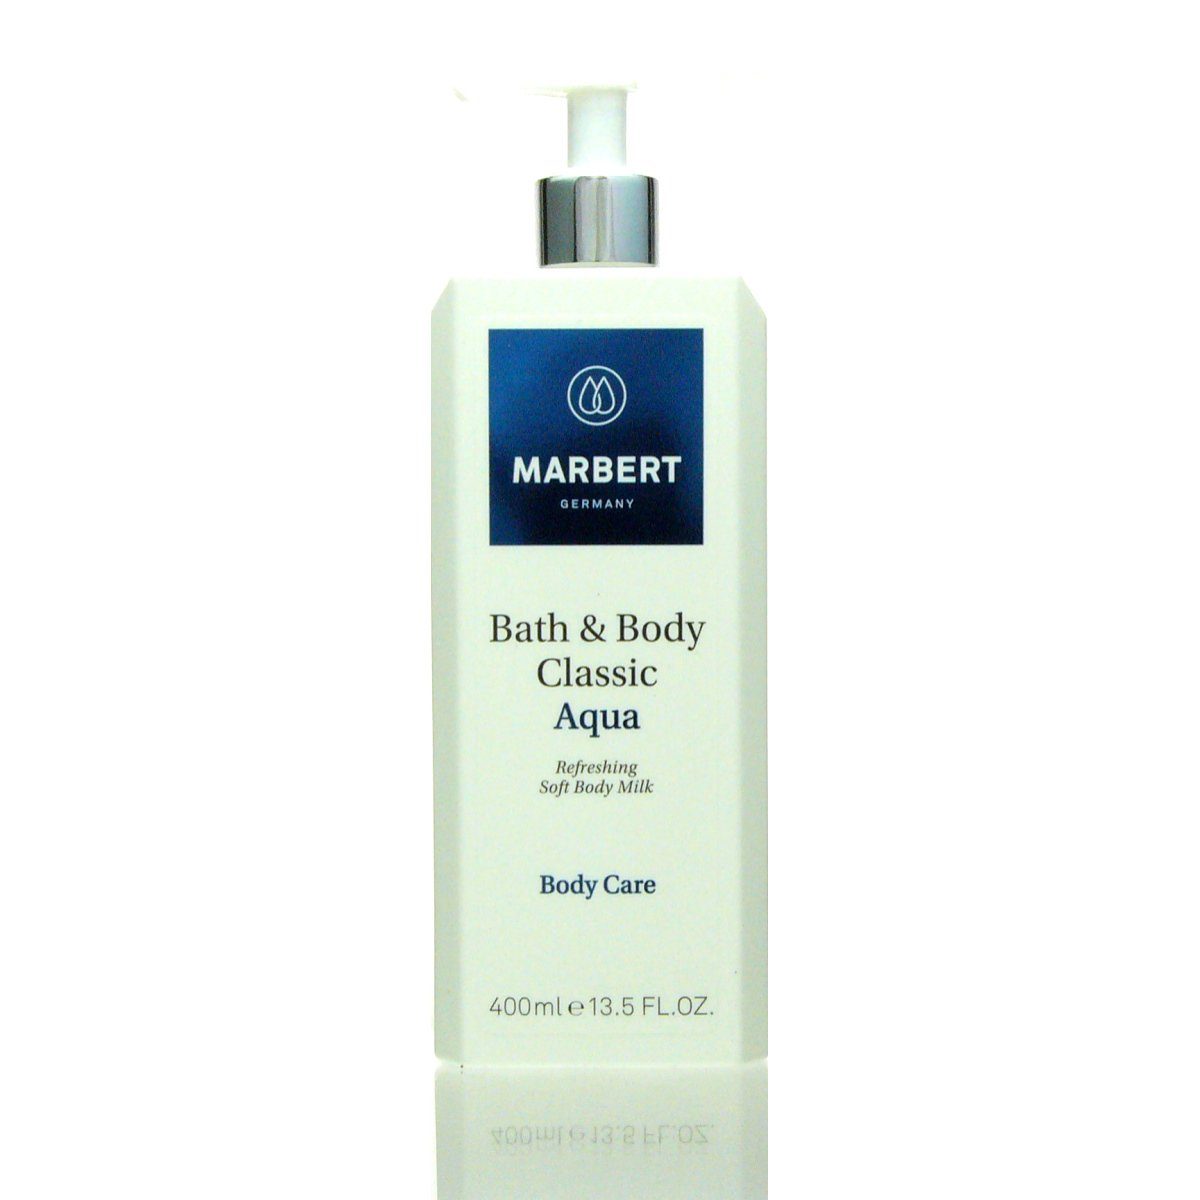 Marbert Bodylotion Marbert Bath & Body Classic Aqua Bodymilk 400 ml, zitrisch-aquatisch duftende Körpermilch